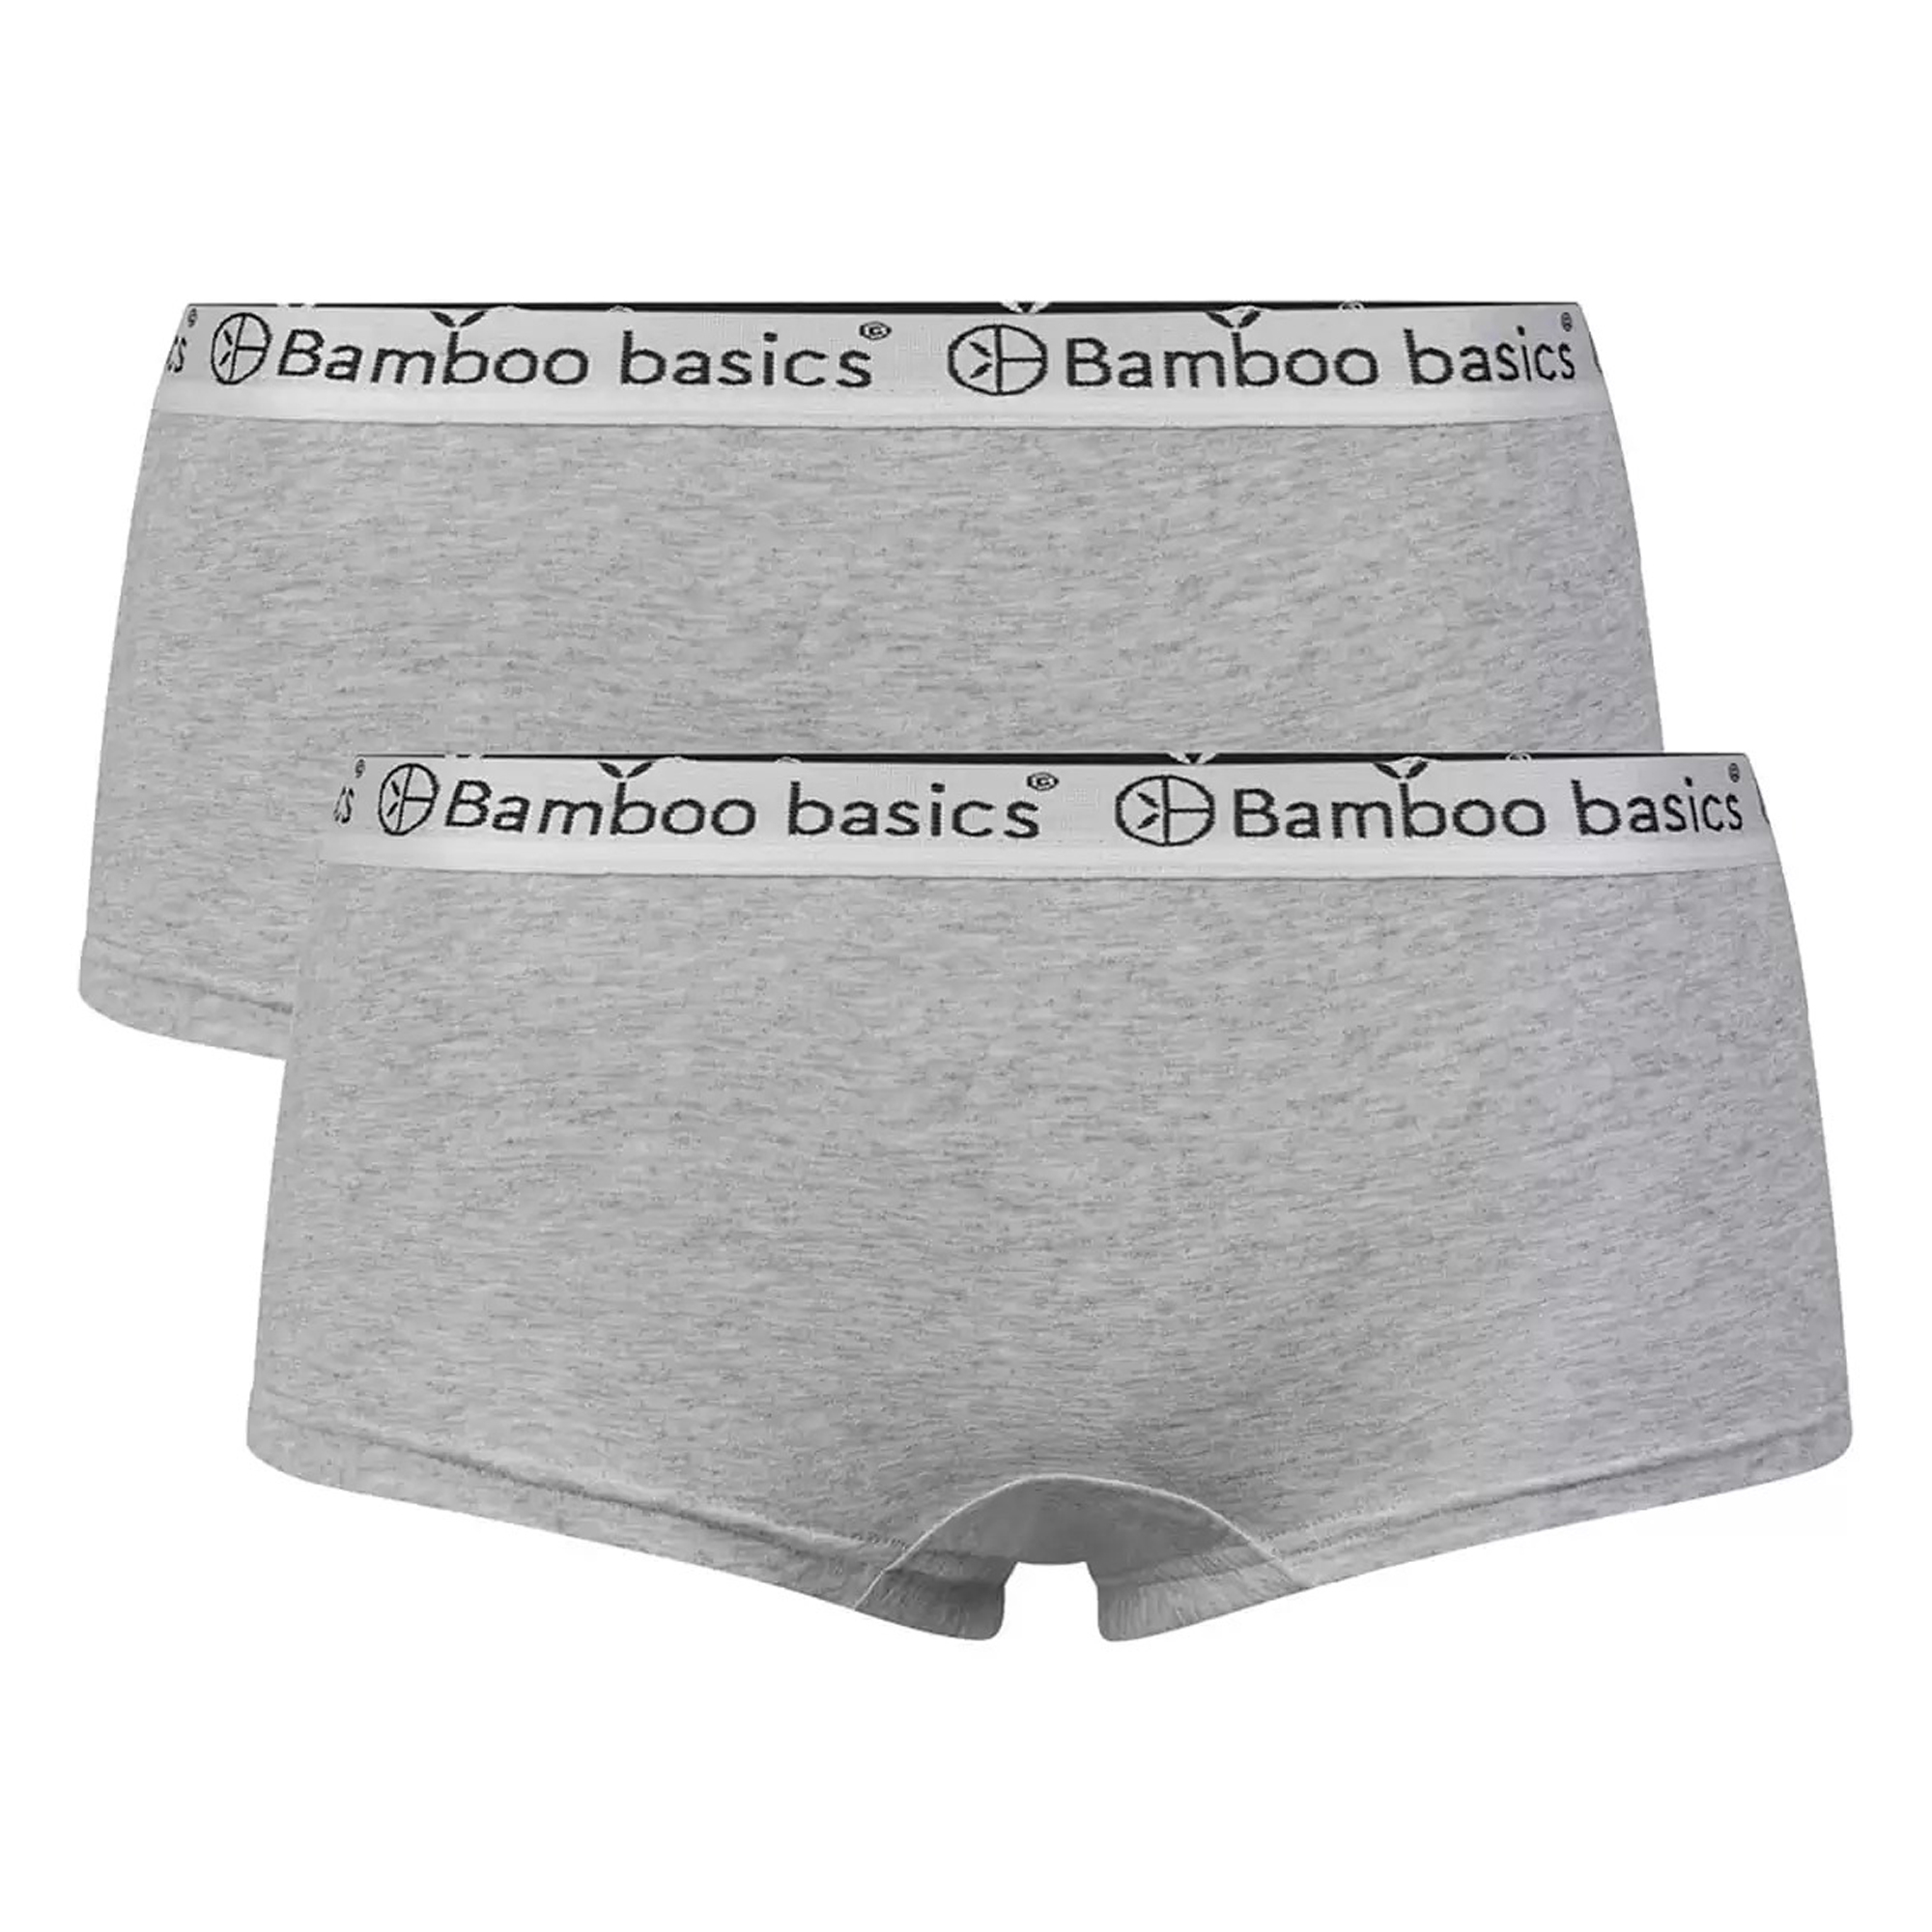 Sous-vêtements Bamboo Basics Iris (Lot de 2)